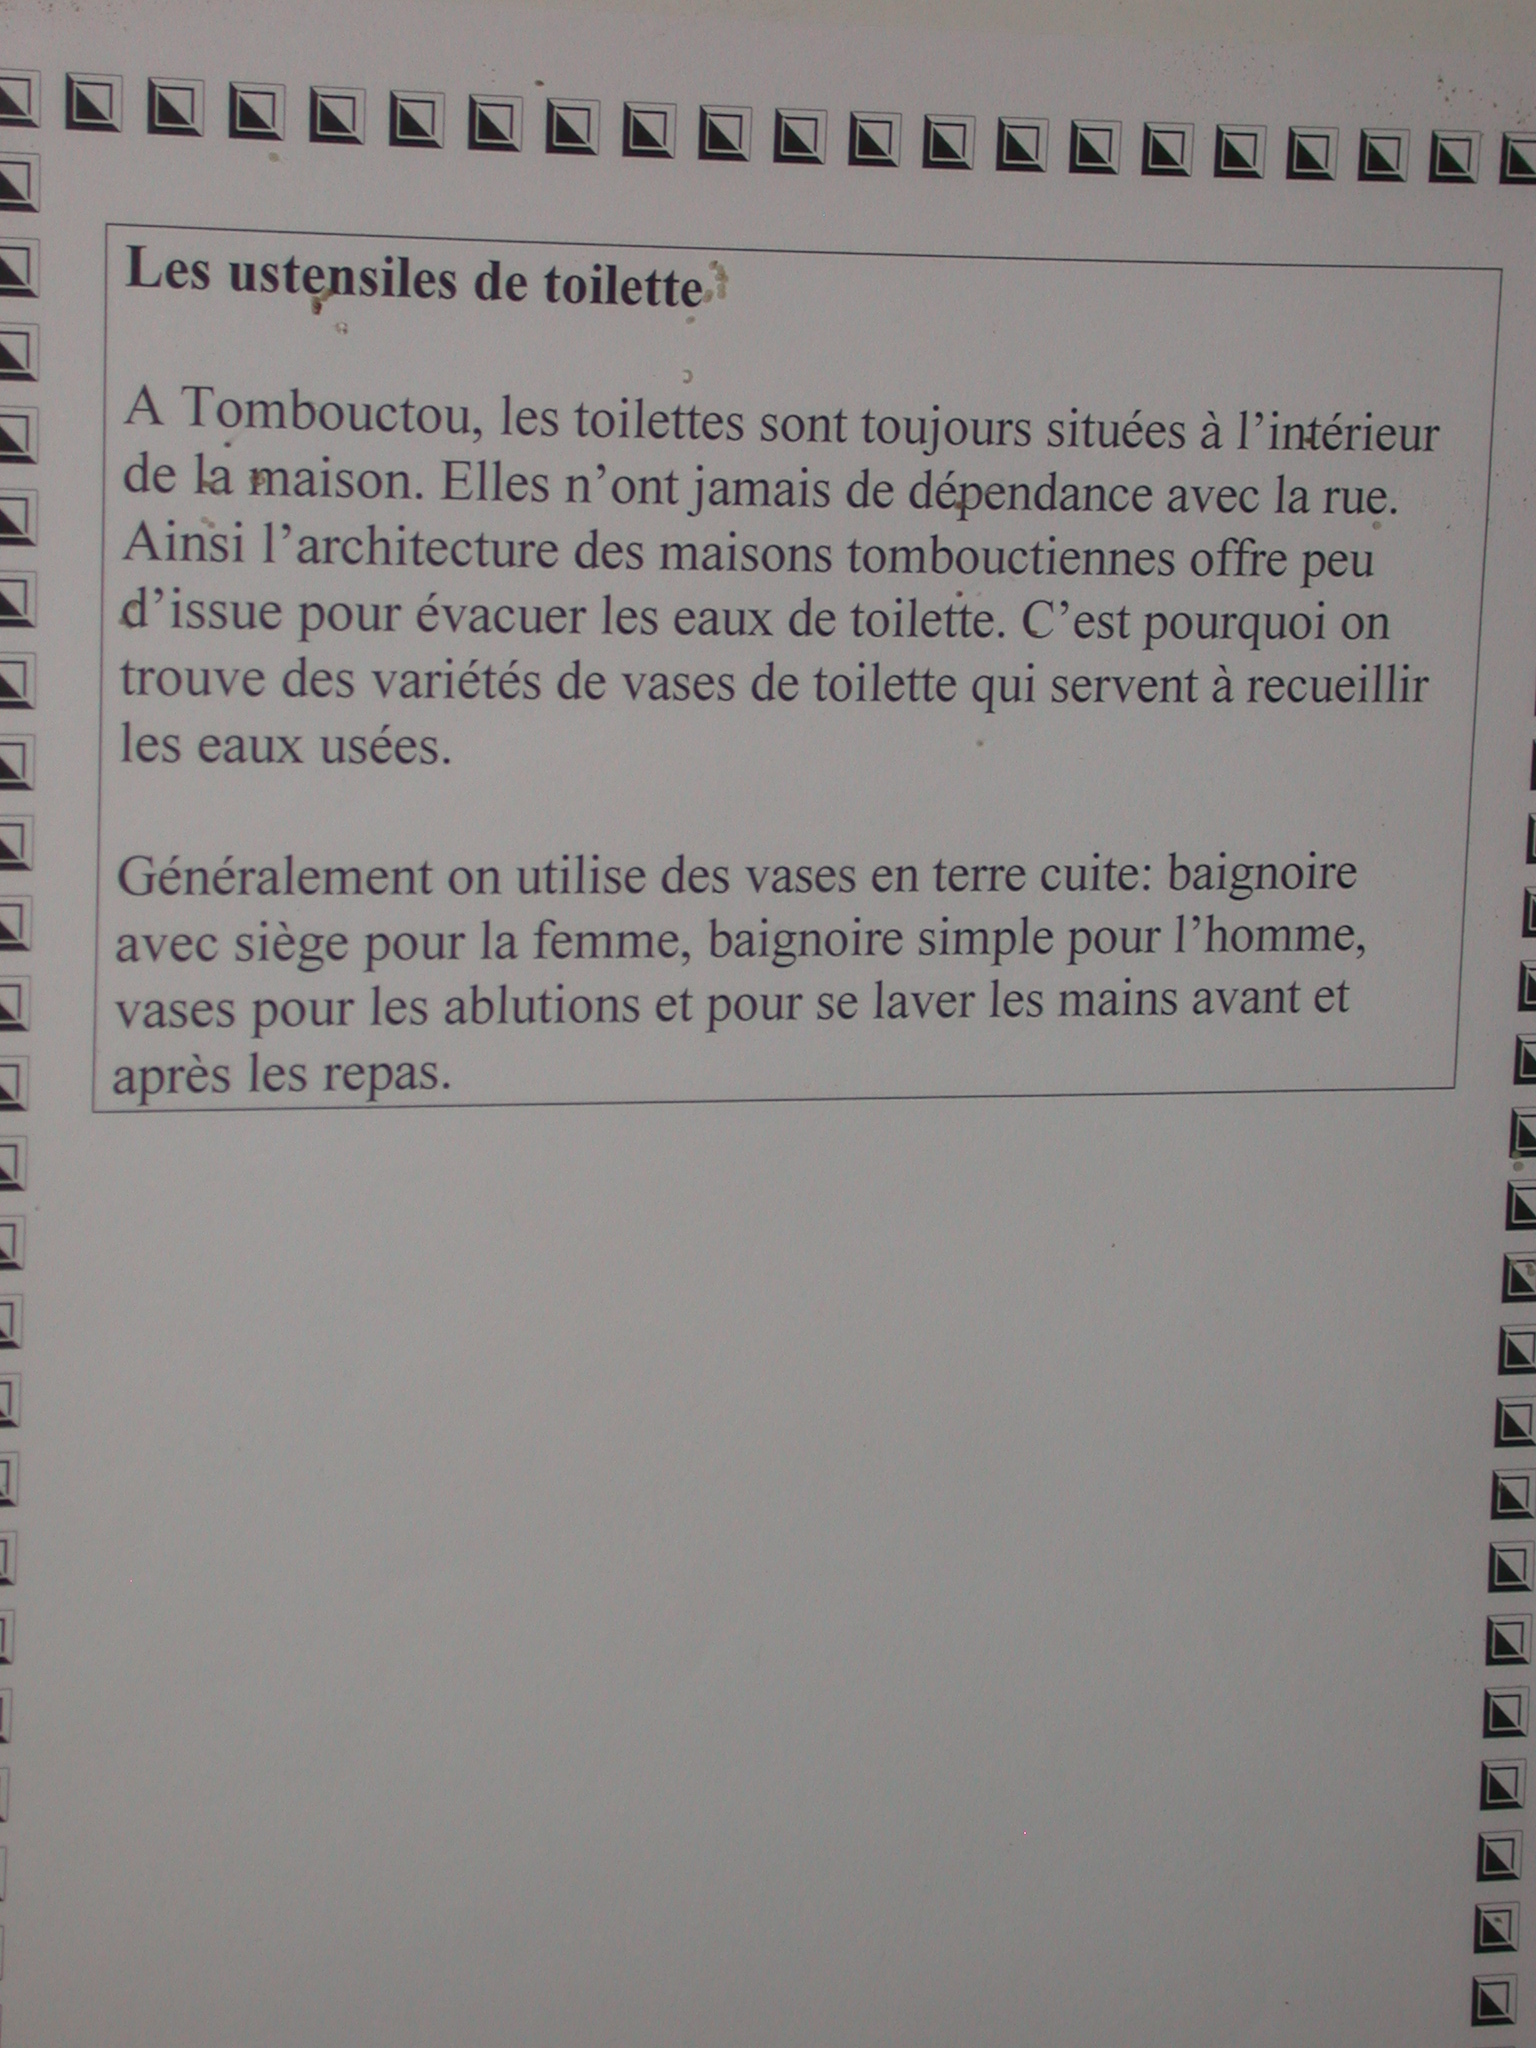 Toilet Utensils Description, Timbuktu Ethnological Museum, Timbuktu, Mali